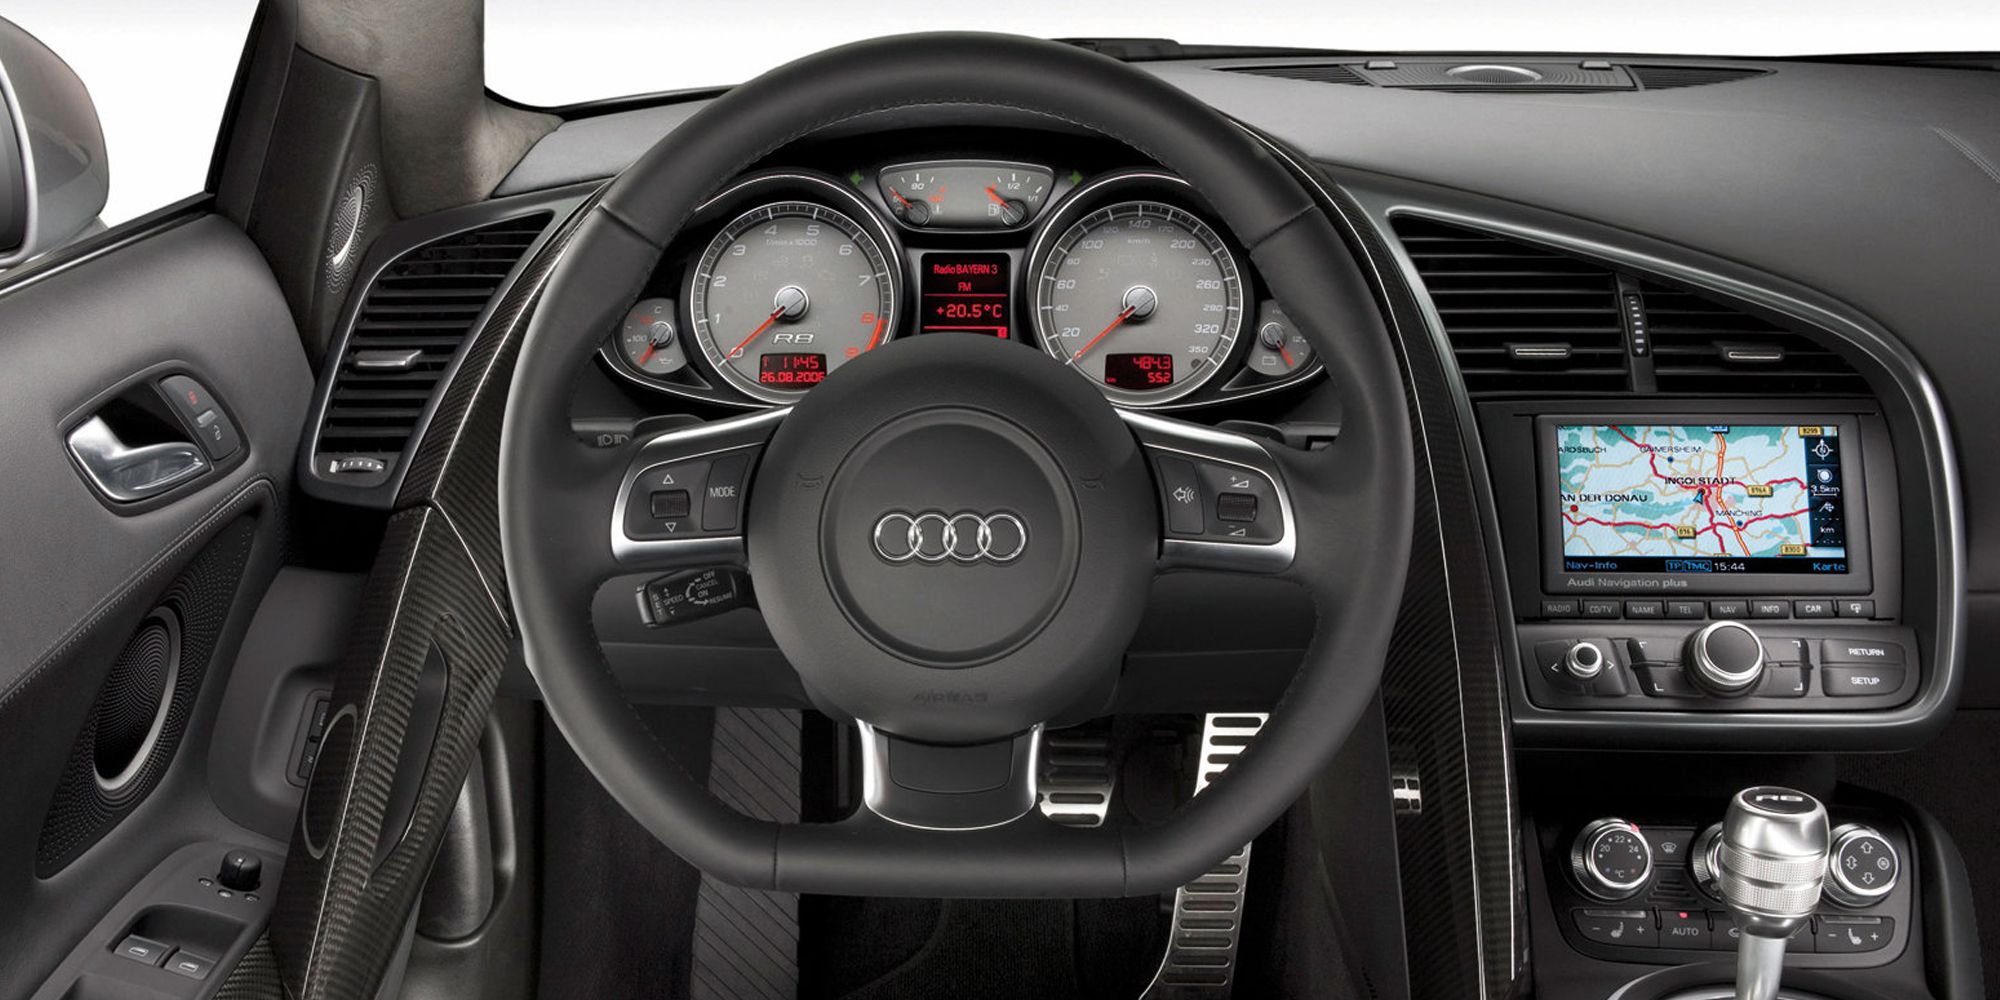 Alternate Angle of the Audi R8 Interior Driver's Seat